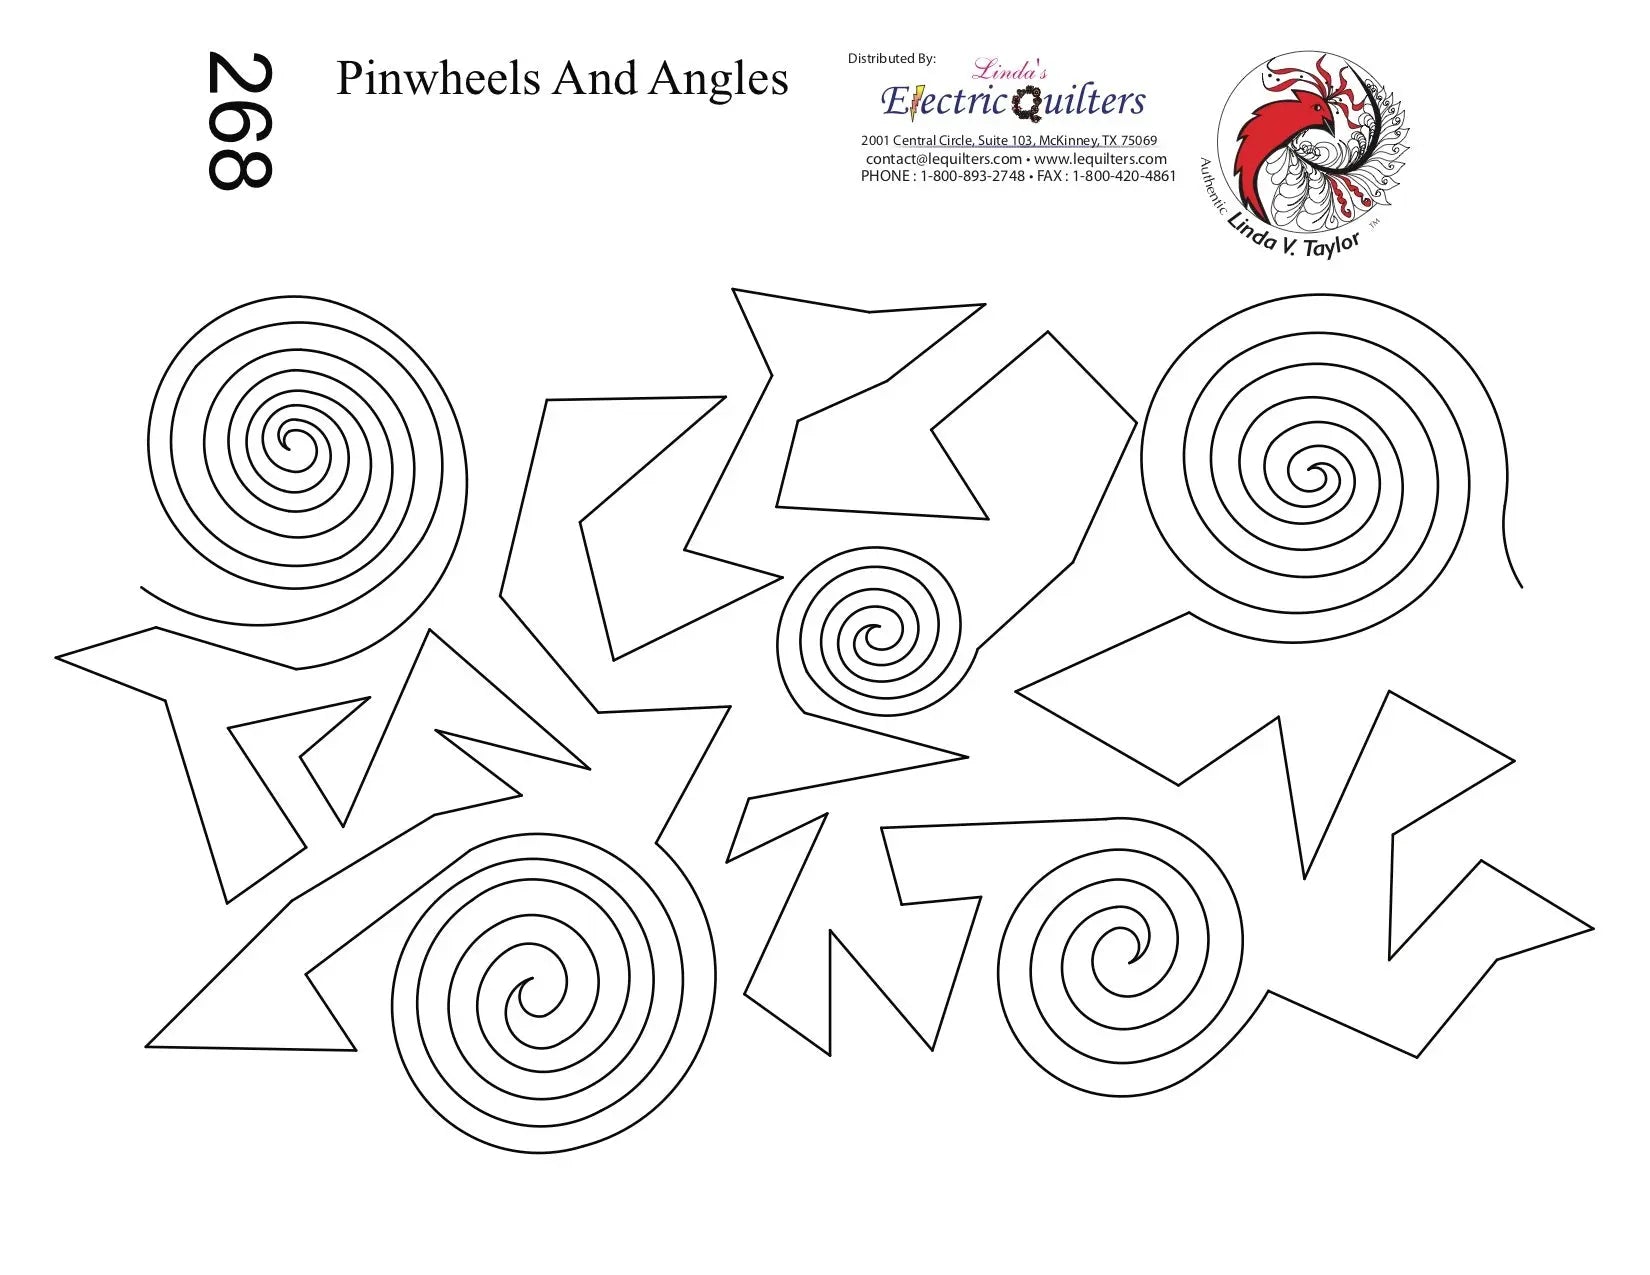 268 Pinwheels And Angles Pantograph by Linda V. Taylor - Linda's Electric Quilters